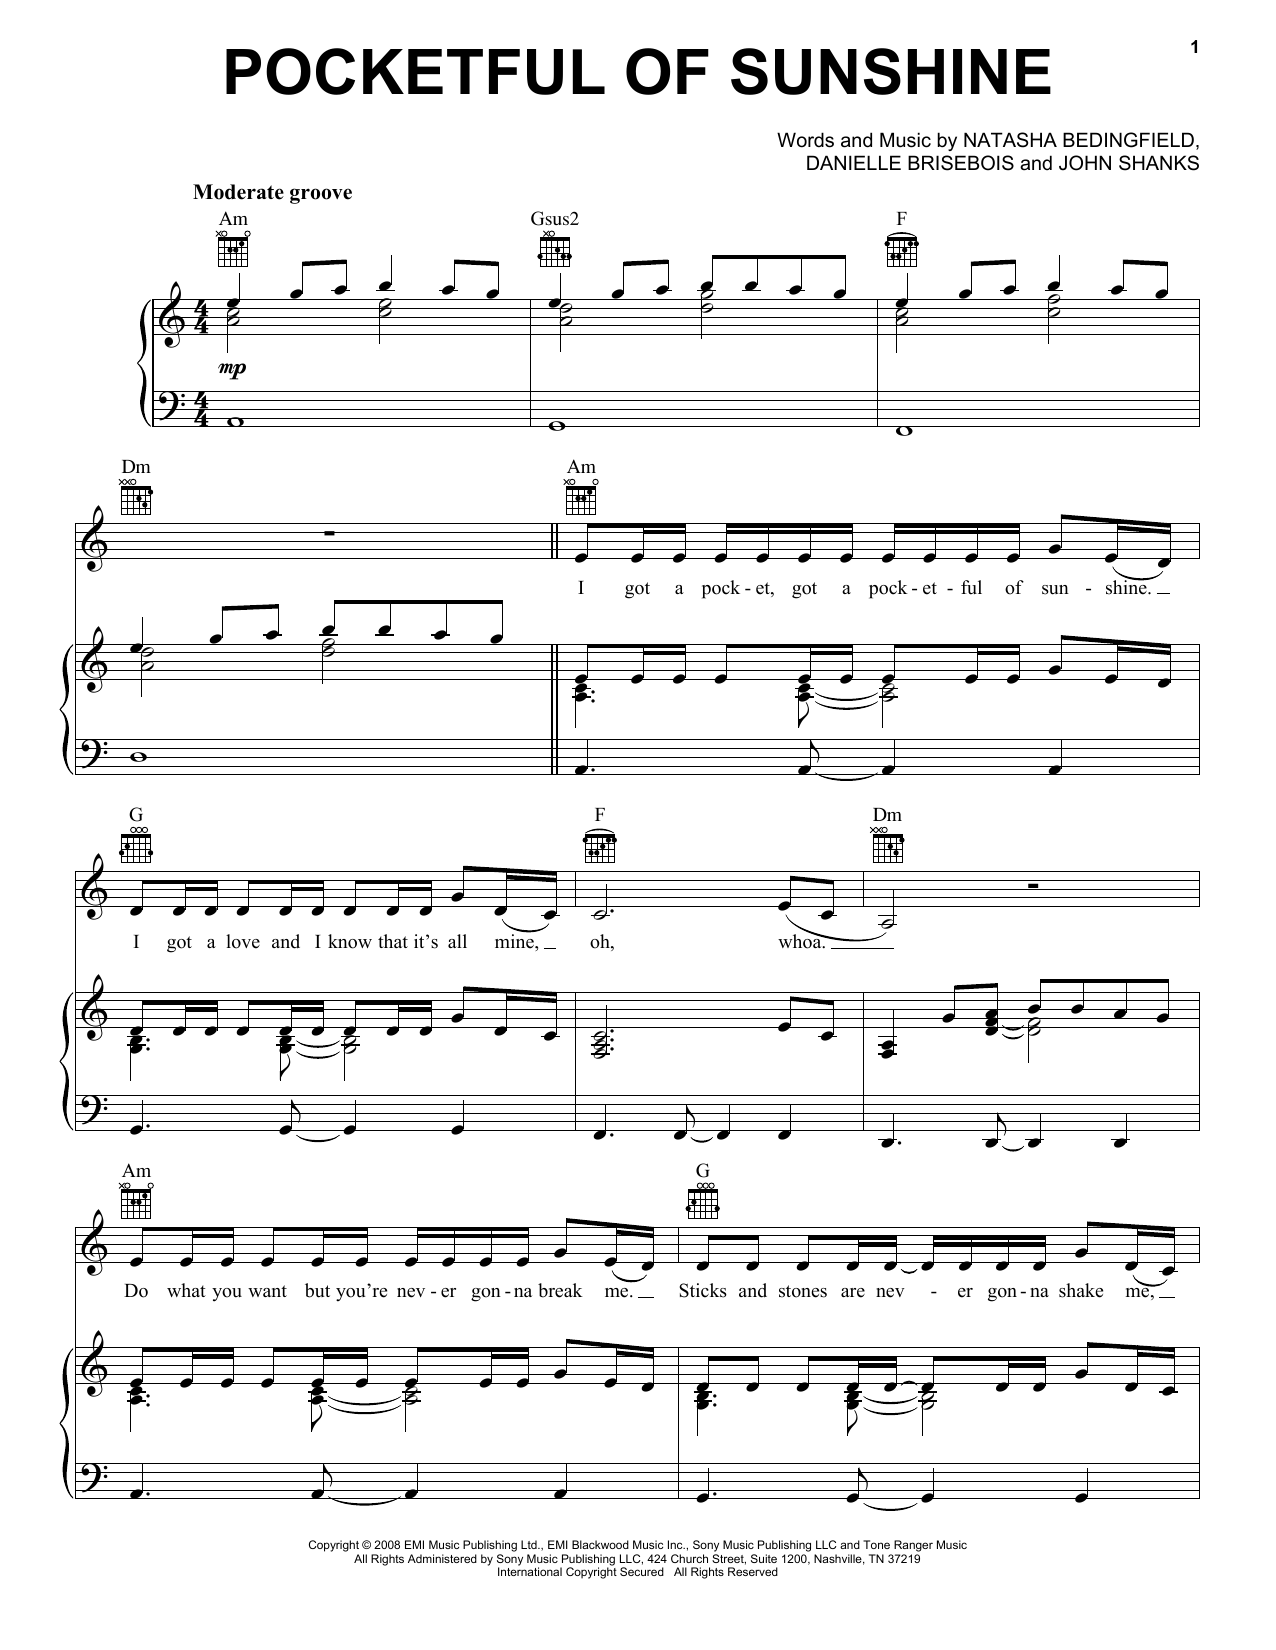 Natasha Bedingfield Pocketful Of Sunshine Sheet Music Notes & Chords for Piano, Vocal & Guitar (Right-Hand Melody) - Download or Print PDF